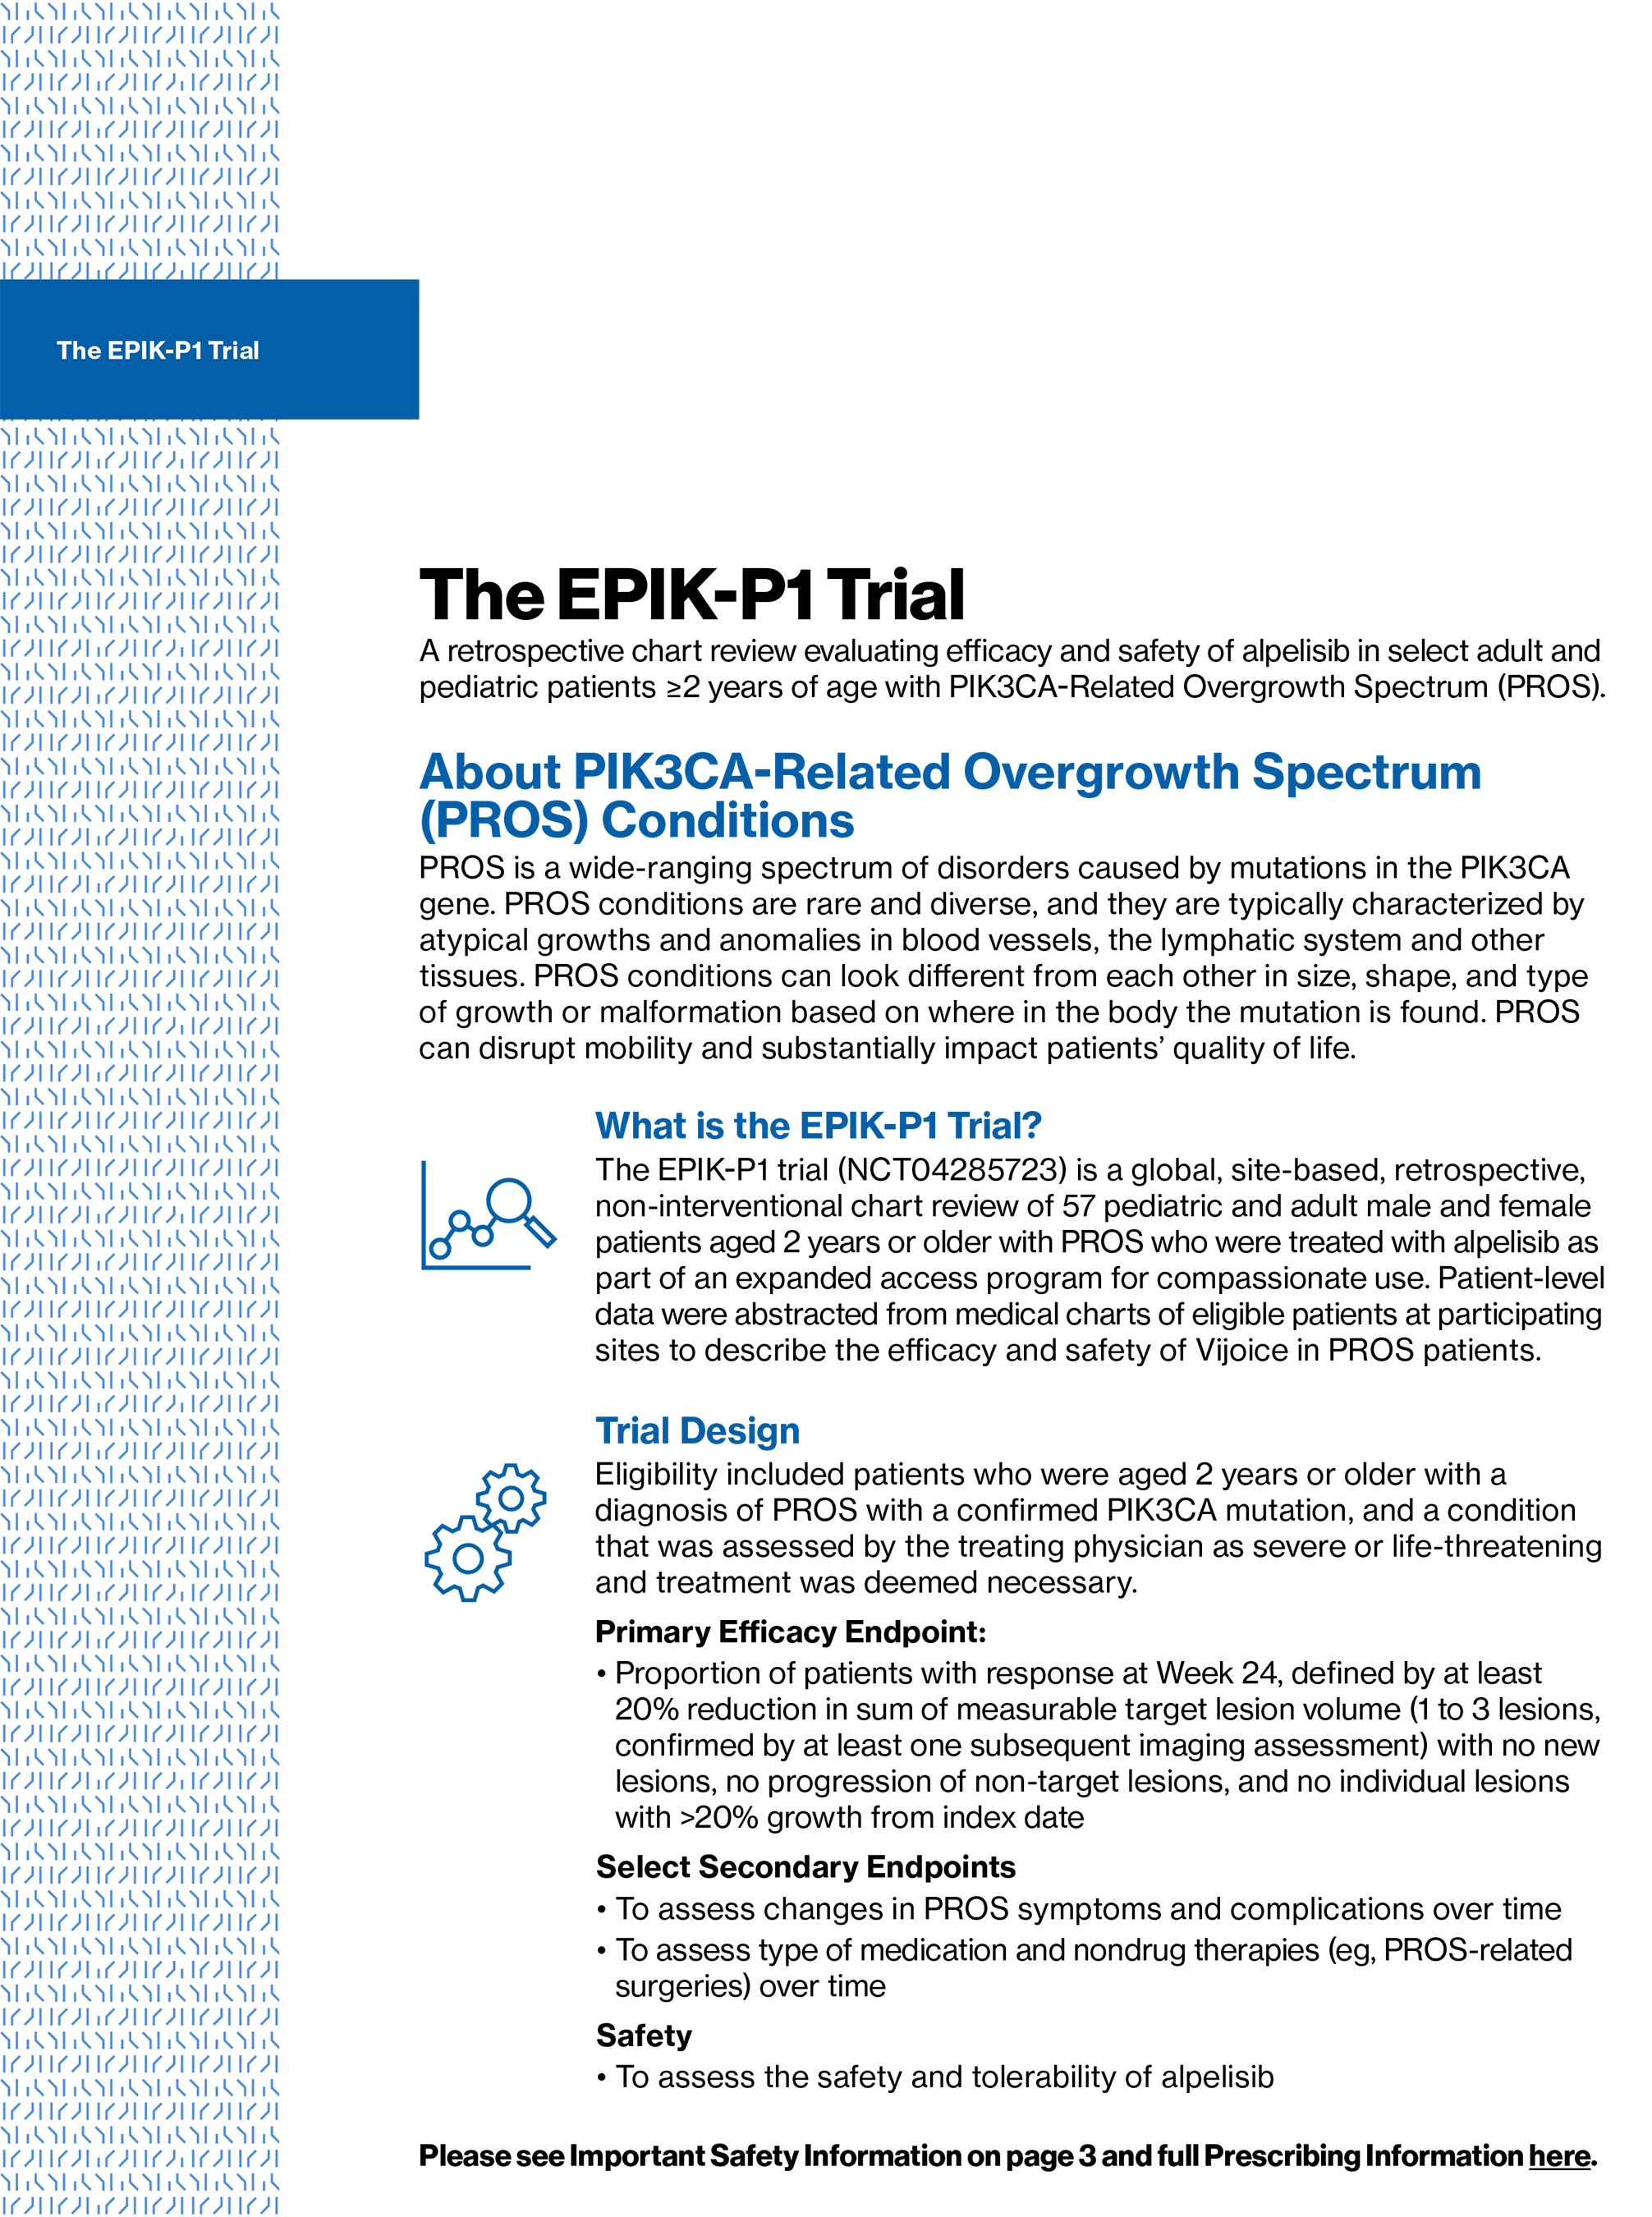 EPIK-P1 Clinical Trial Program Fact Sheet